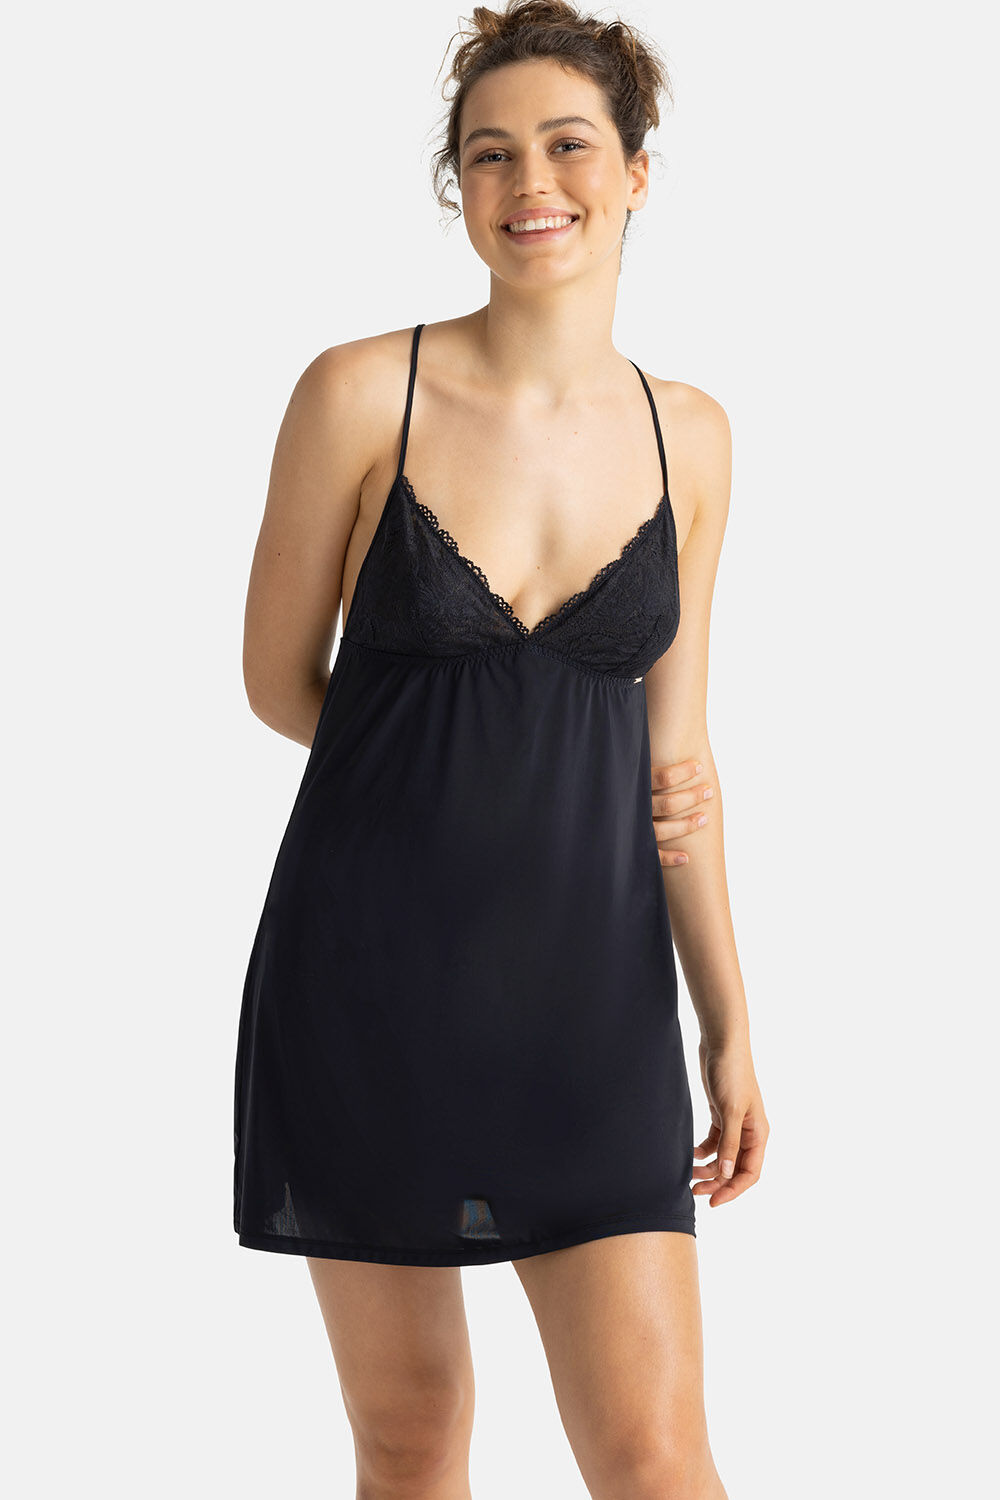 DORINA Women’s Black Lace Stylish Slip Dress, Size: 16